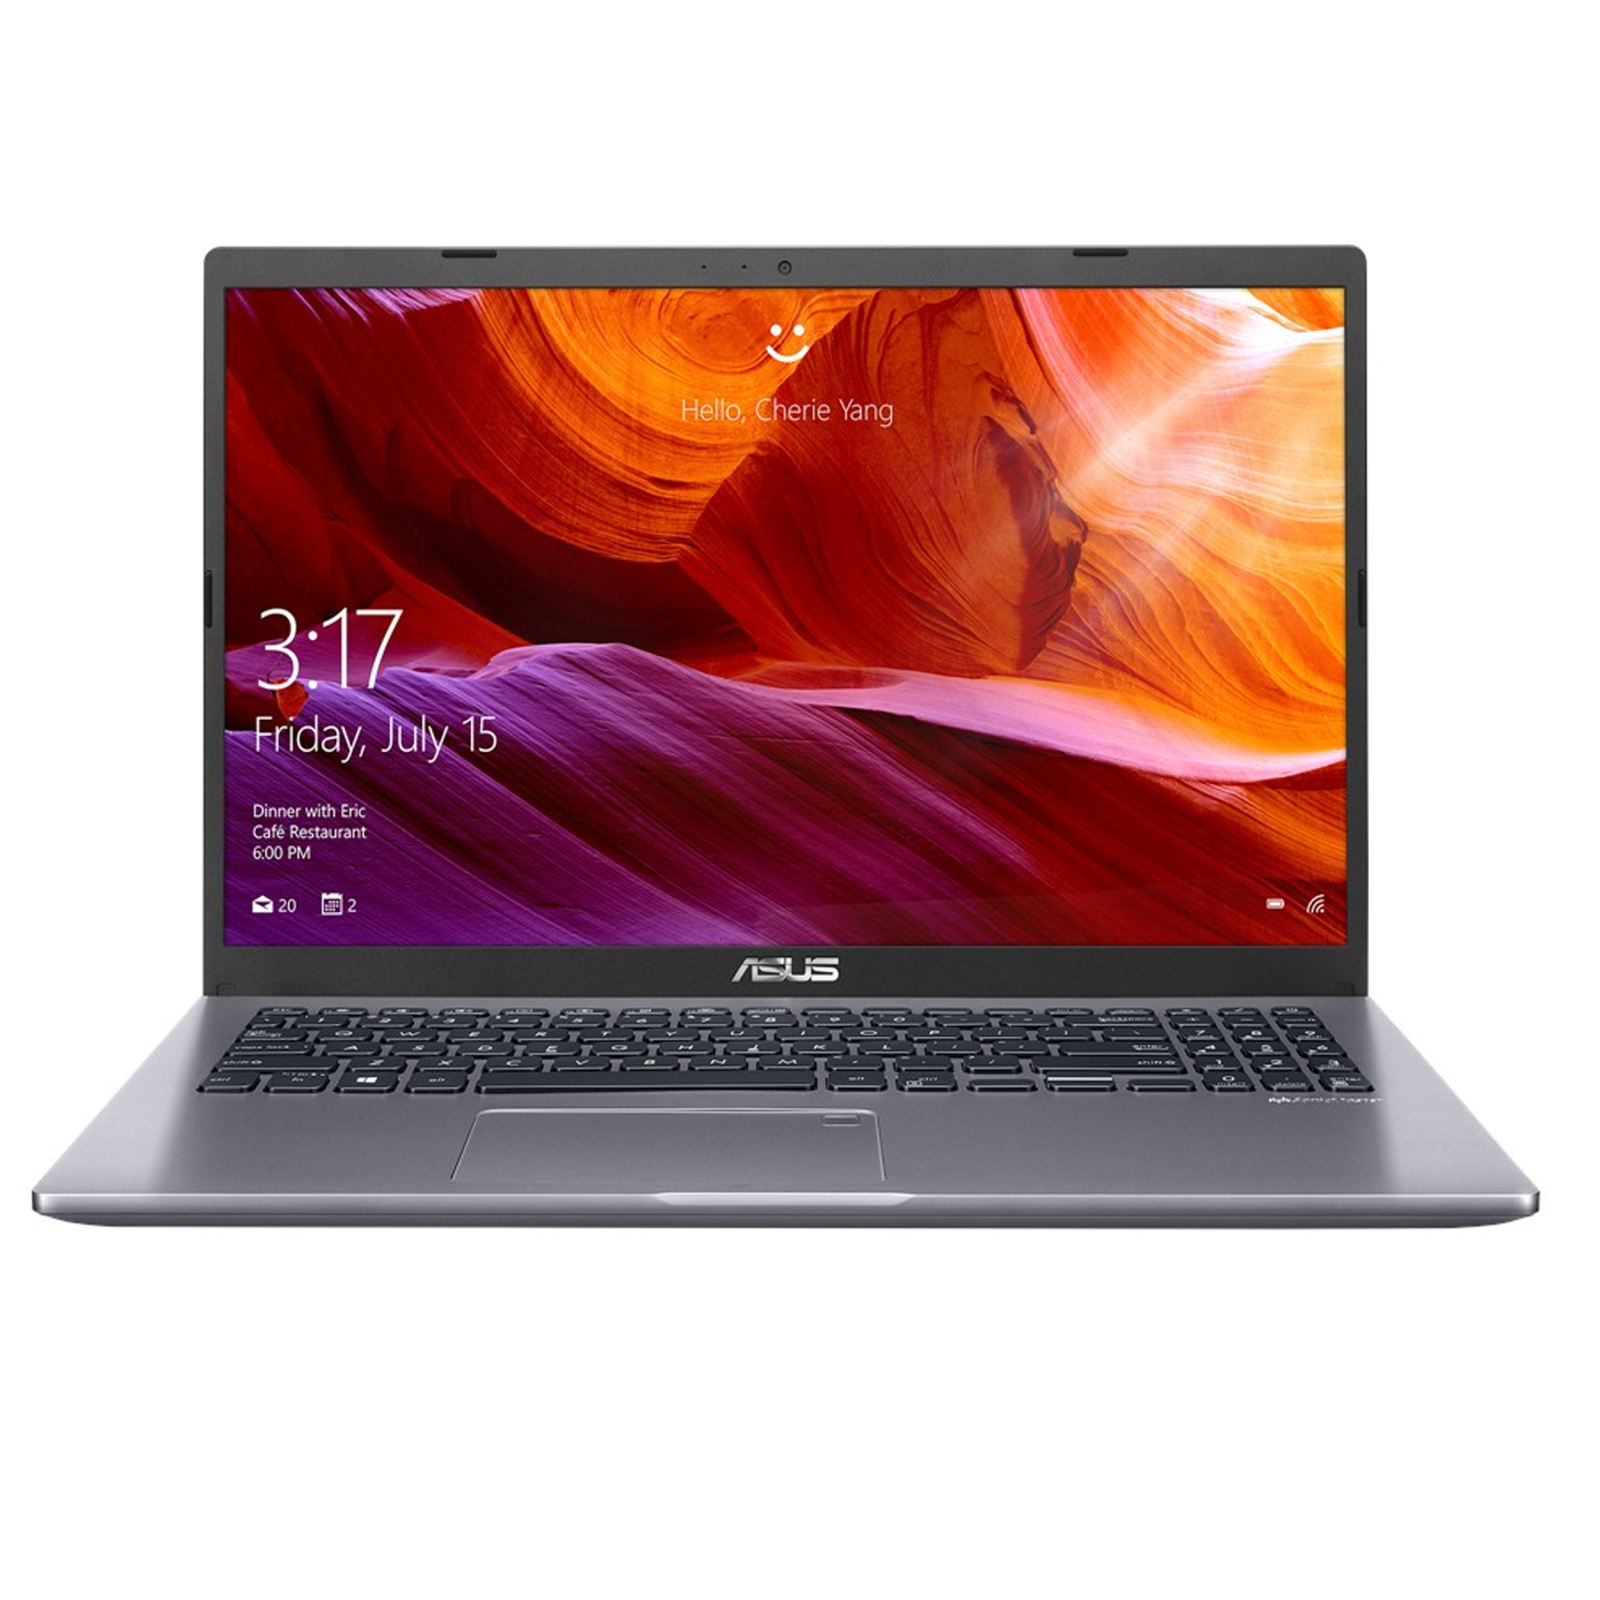  Asus R521JB-C Laptop